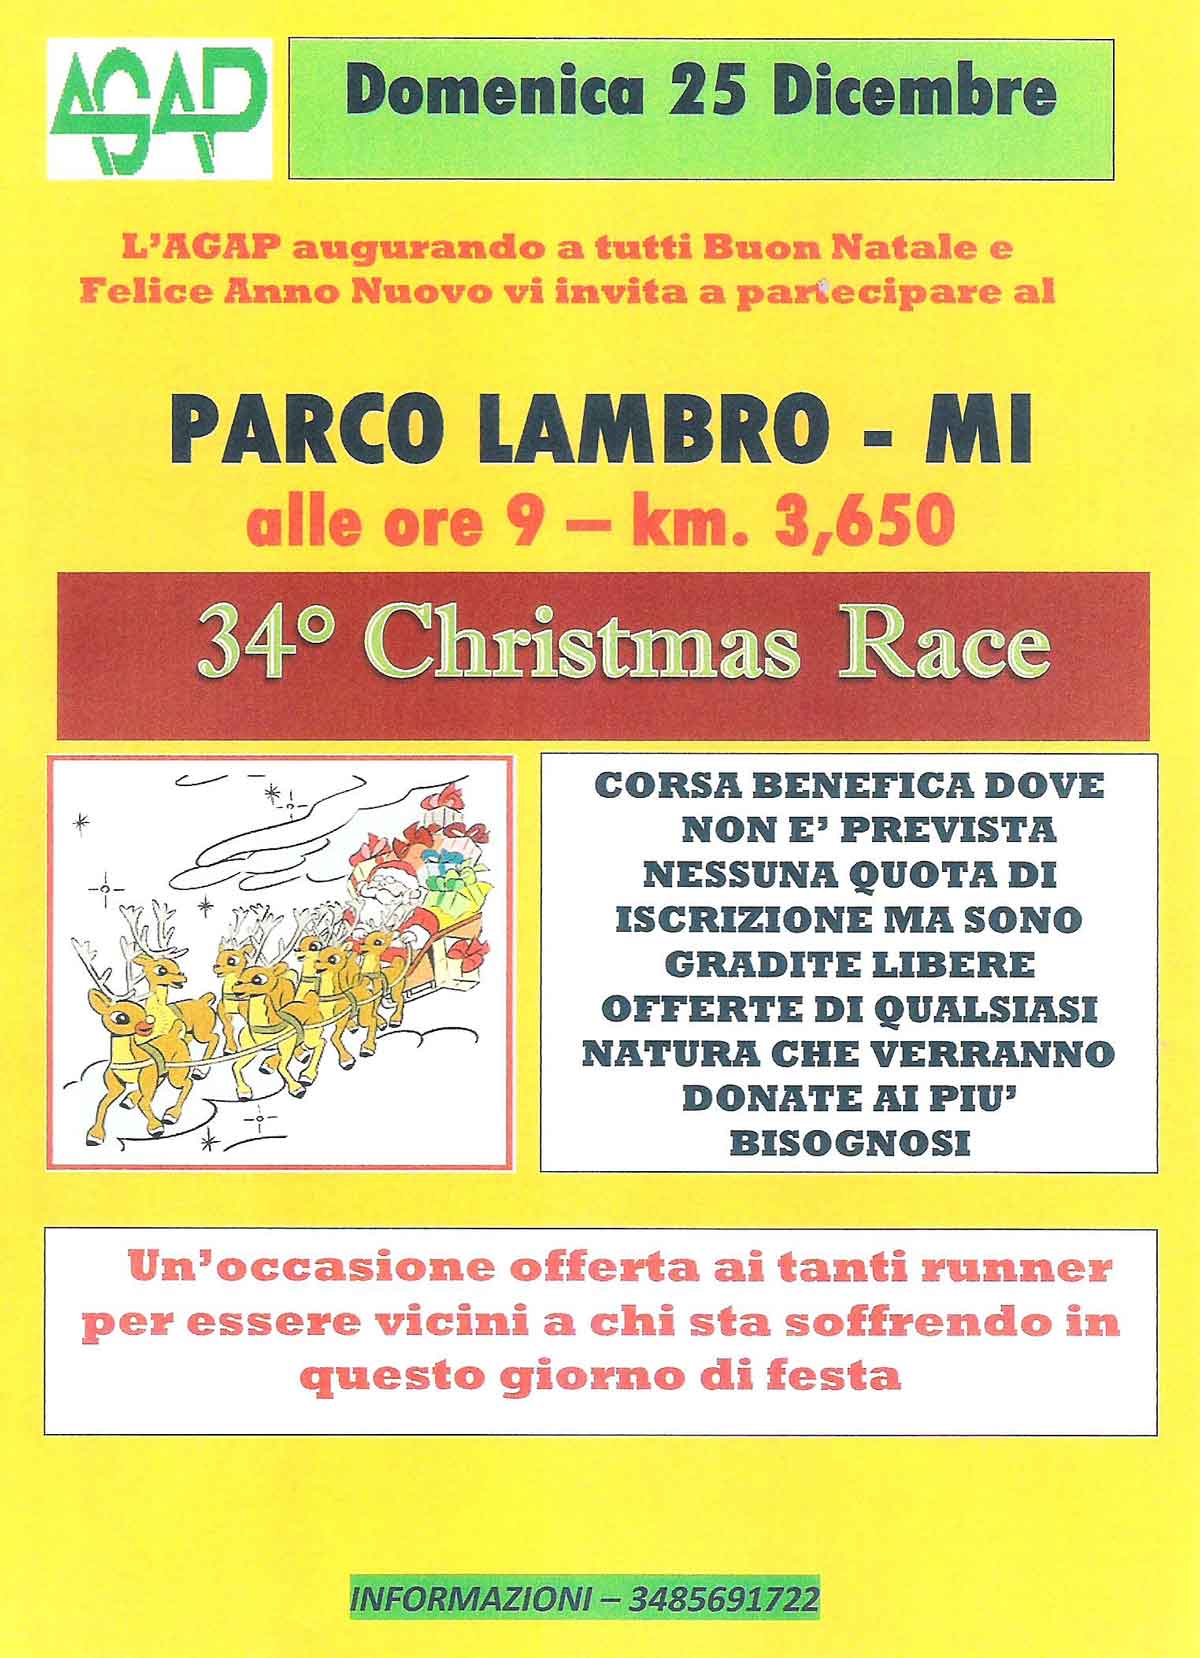 34^ Christmas Race Parco Lambro